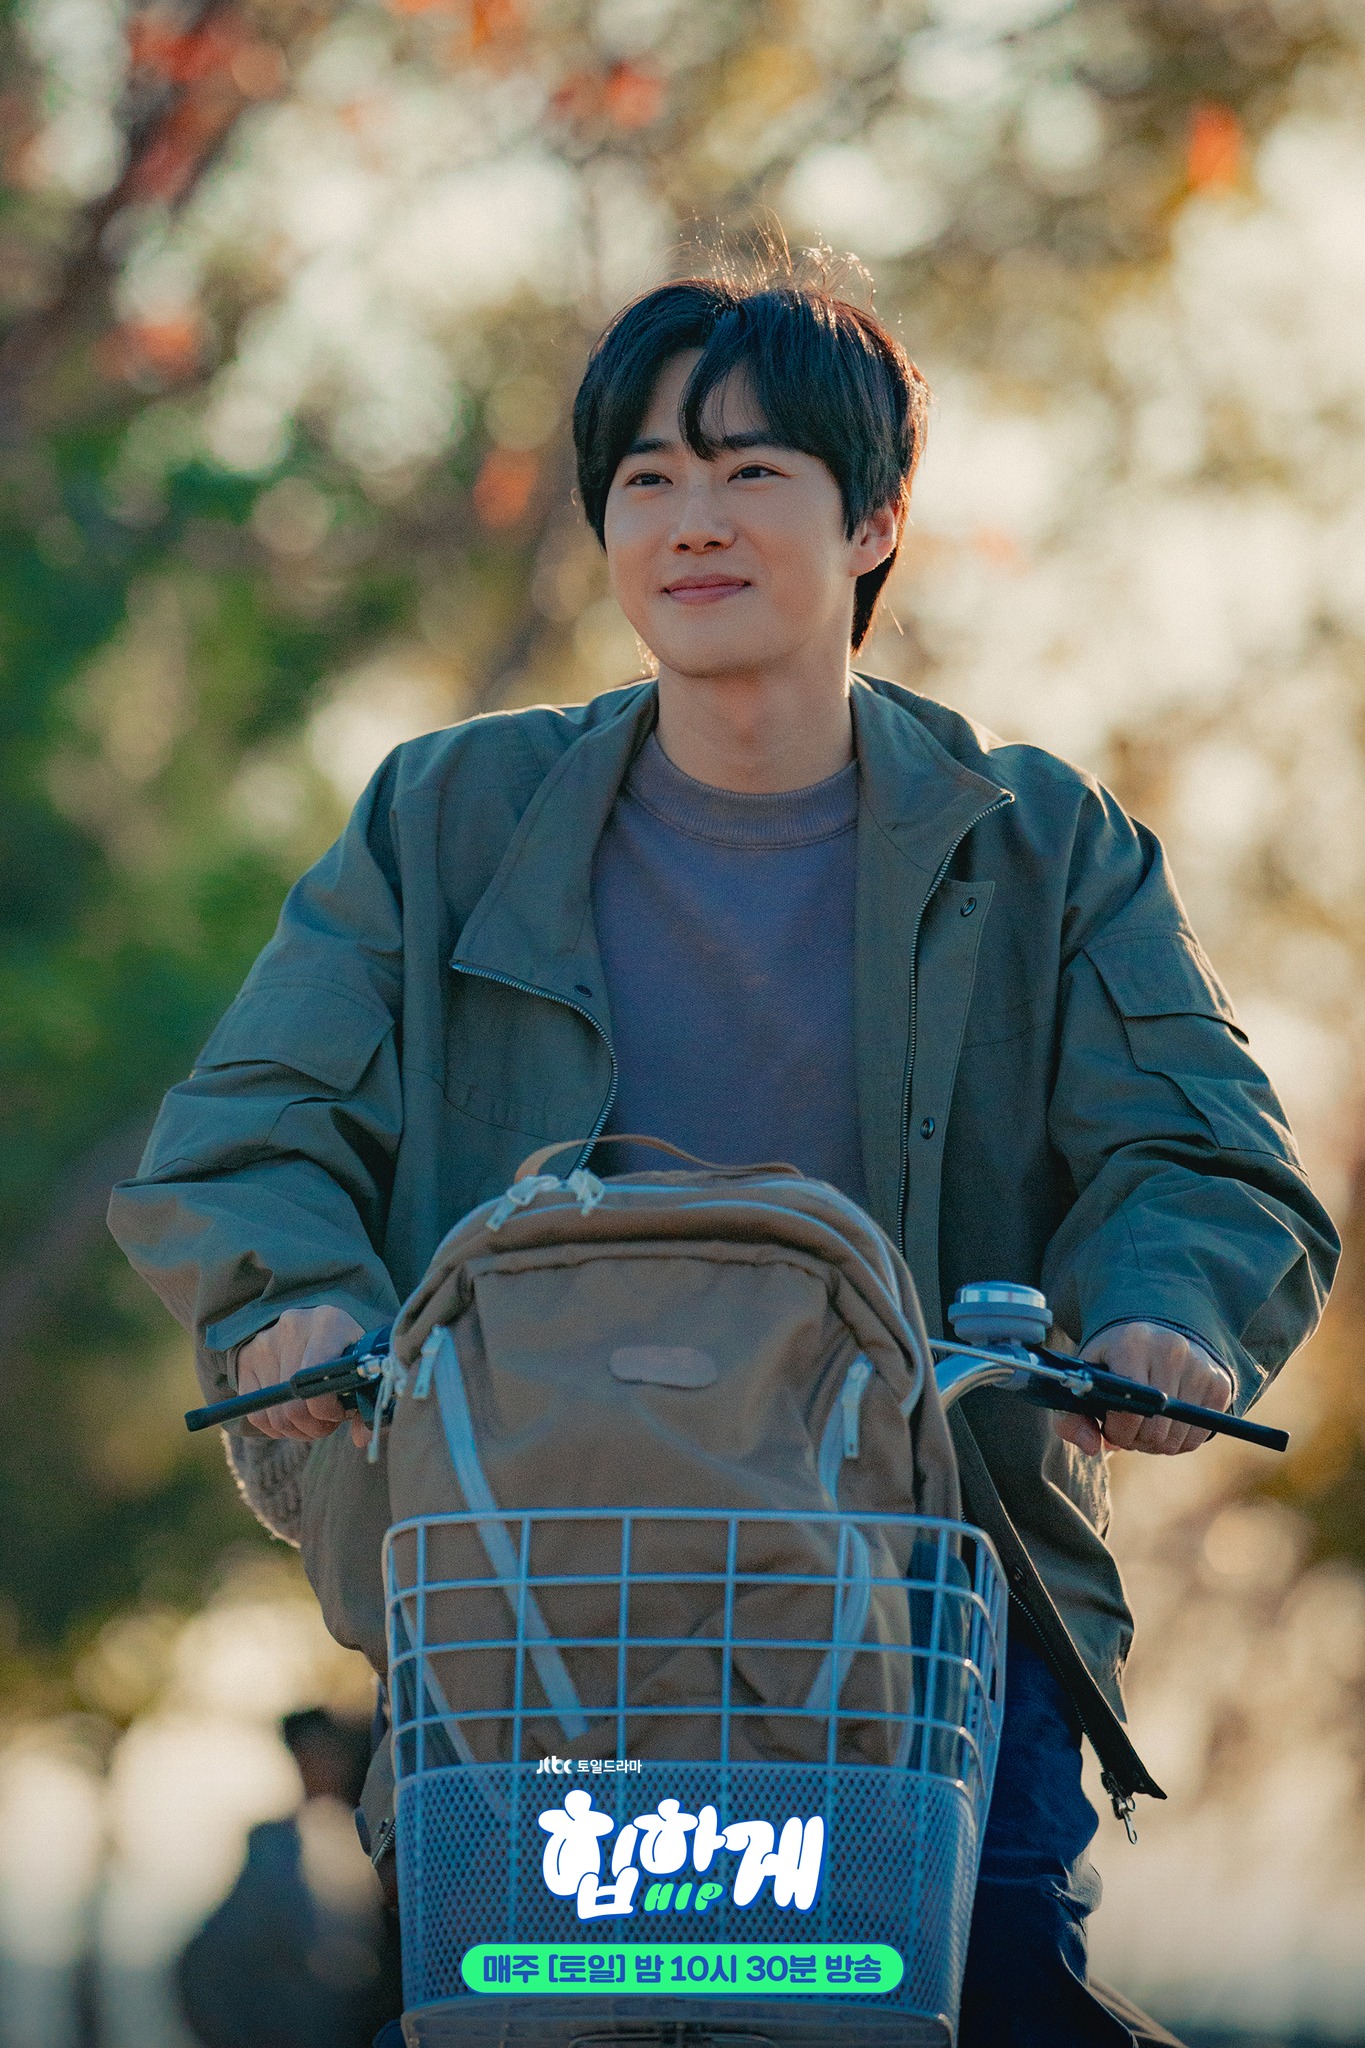 Ли Мин Ги видит, как Хан Джи Мин катается на велосипеде с Сухо из EXO, в дораме "За твоим прикосновением"